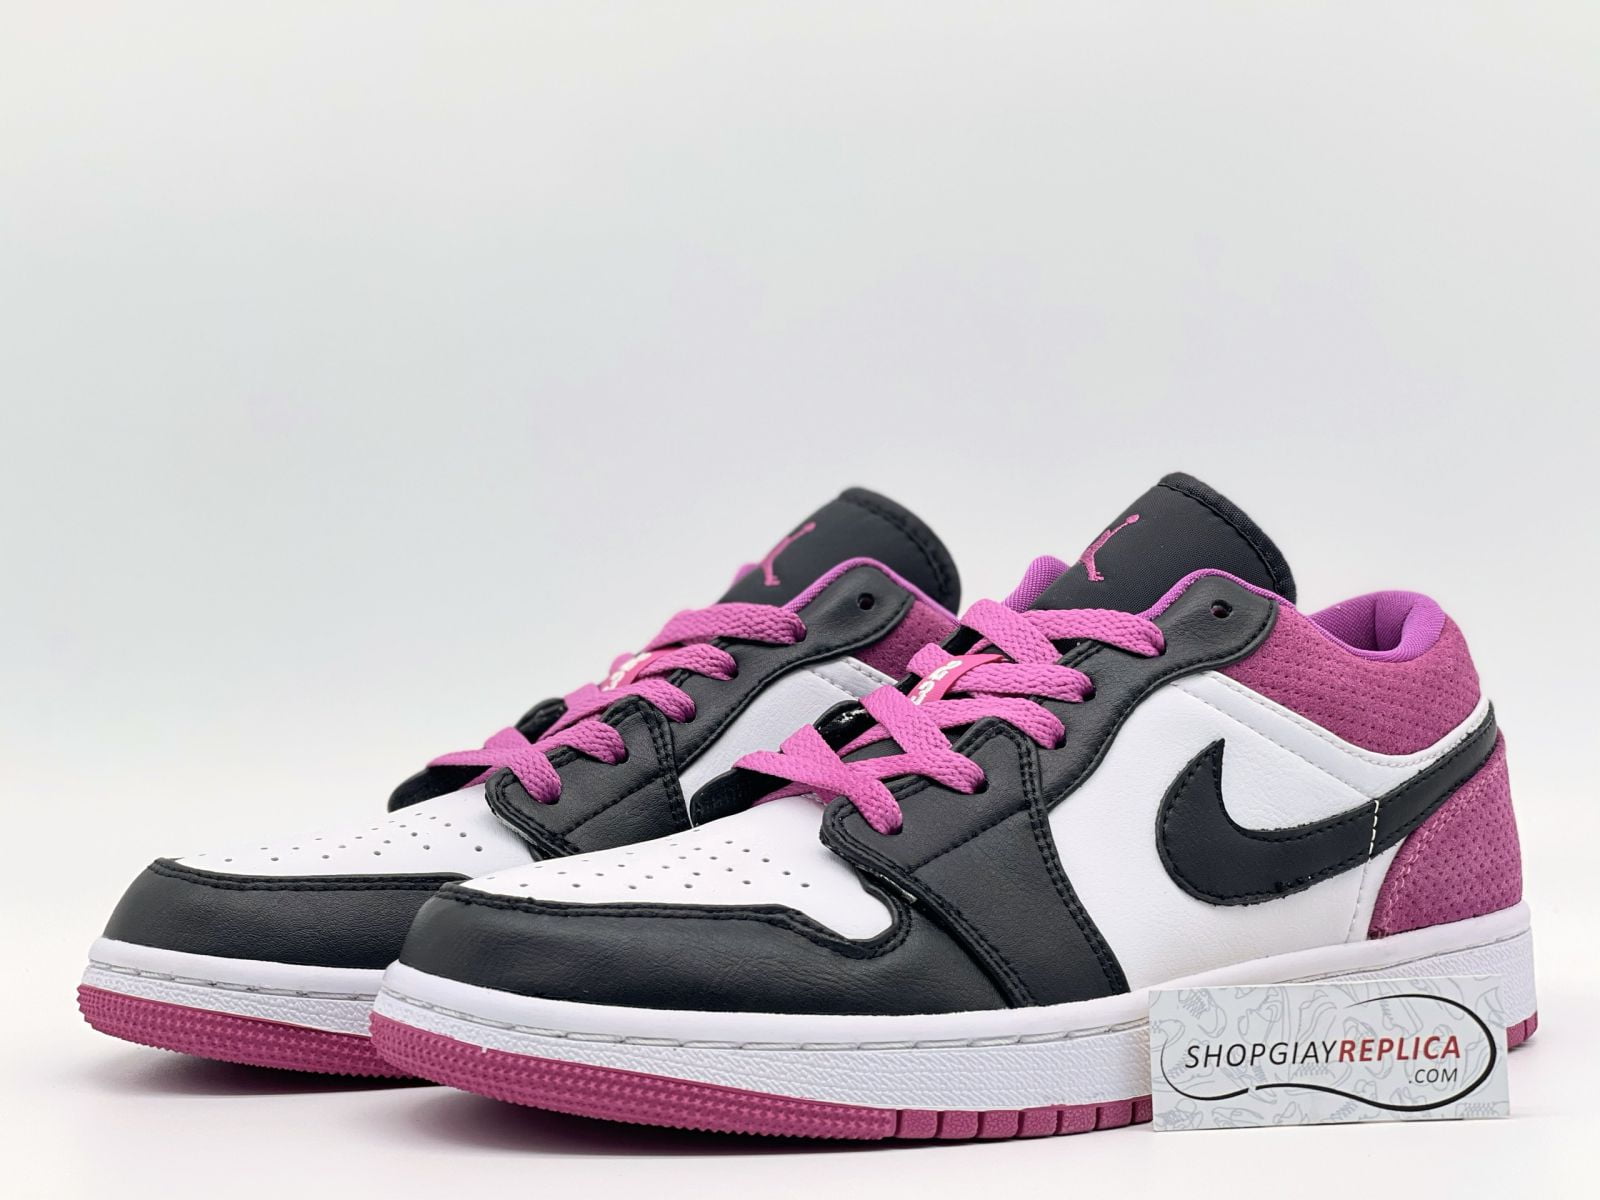 Giày Nike Jordan 1 Low Active Fuchsia Binz đi